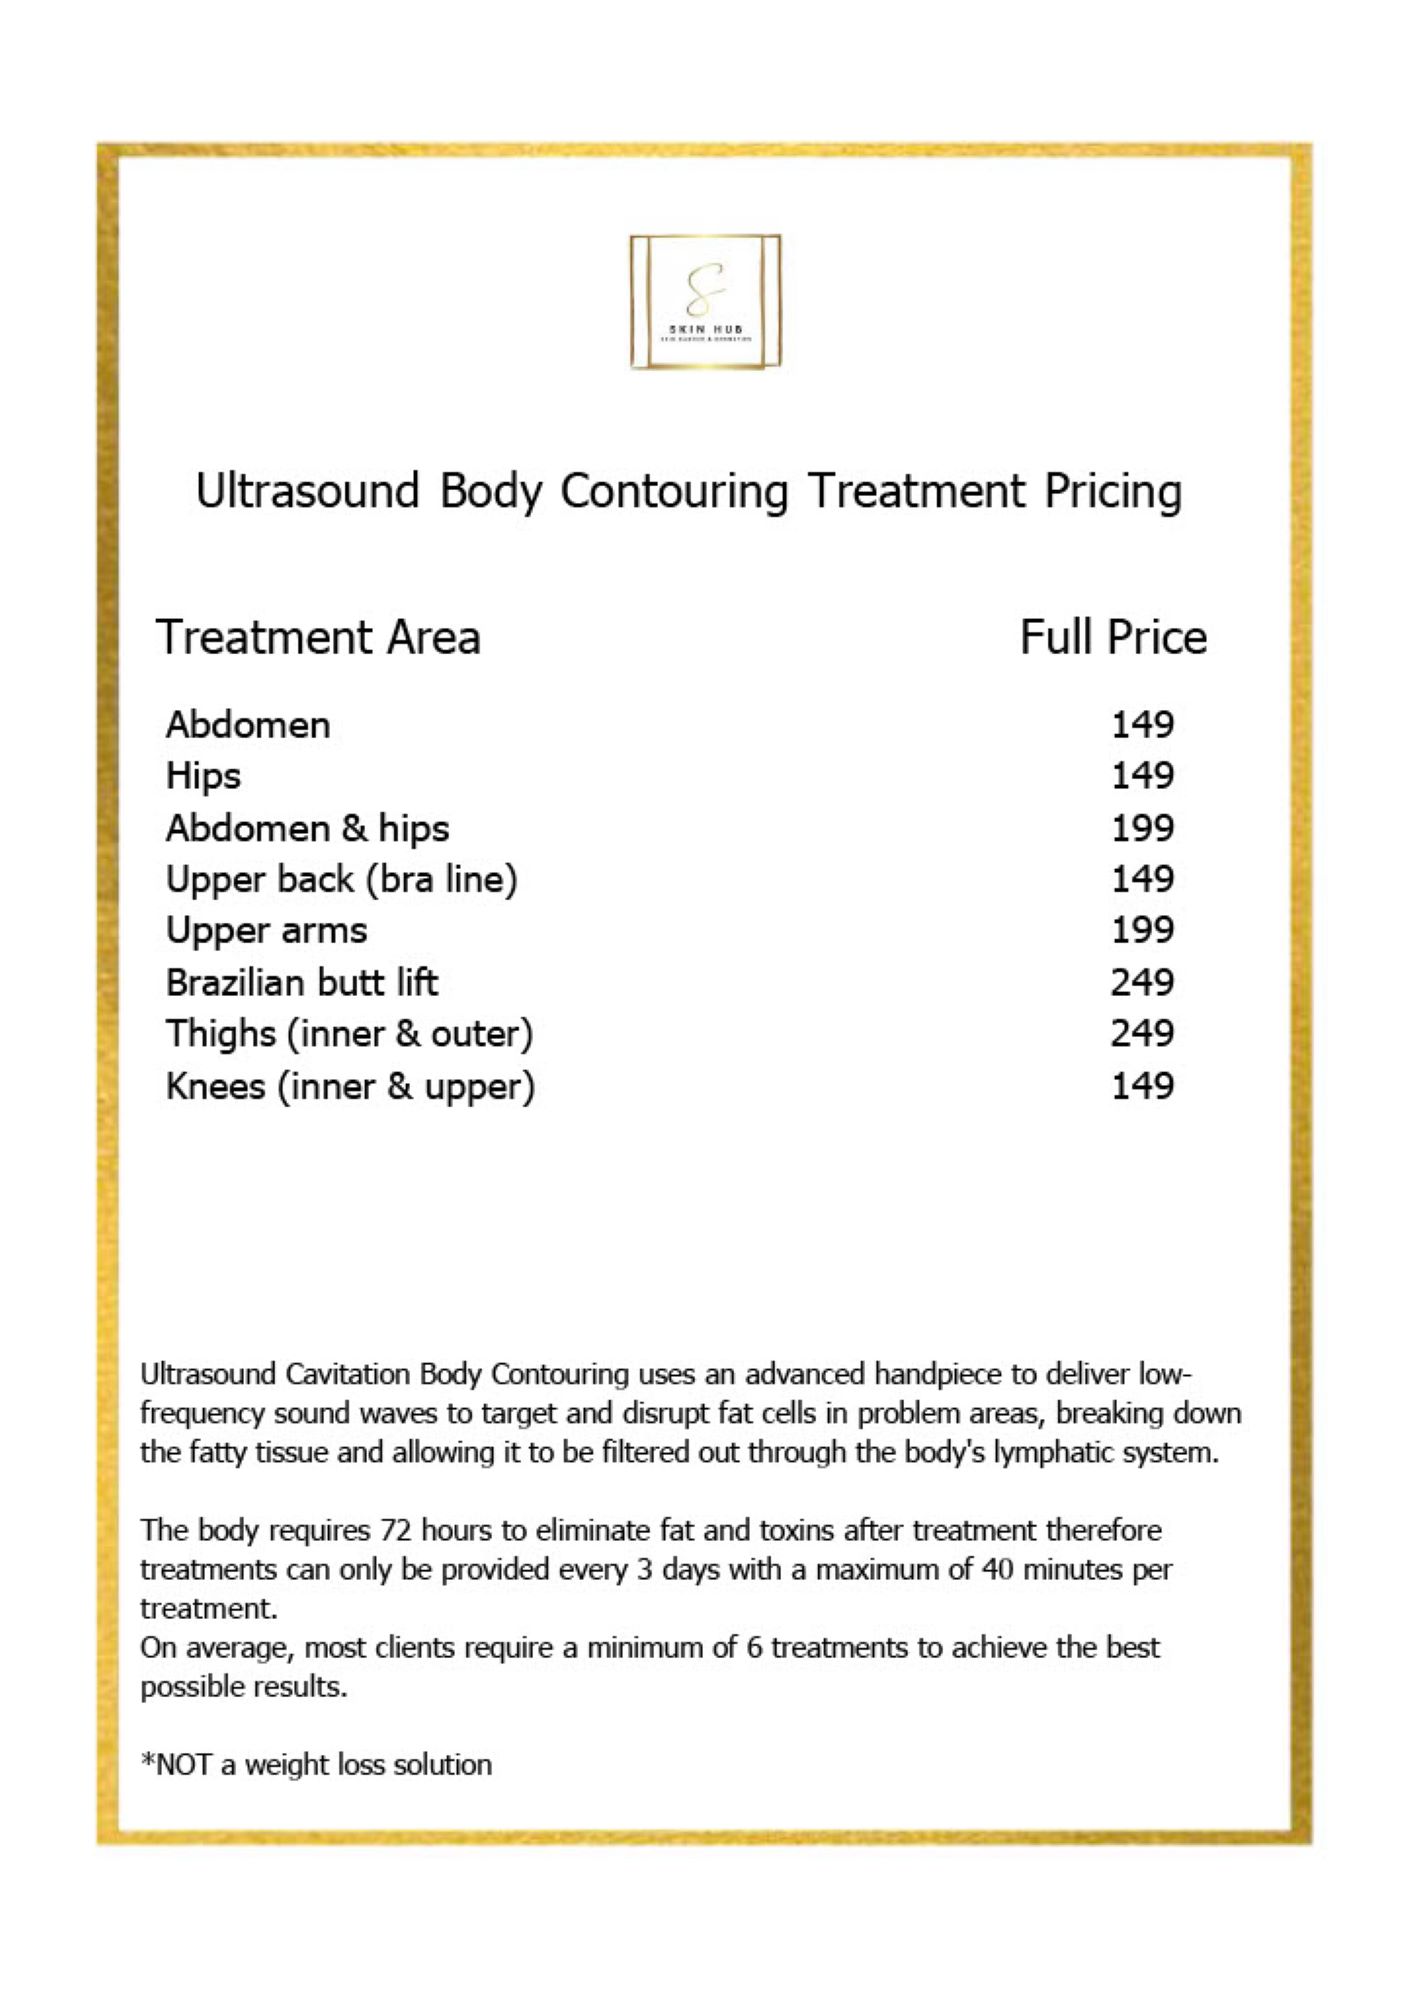 Ultrasound Body Contouring Price